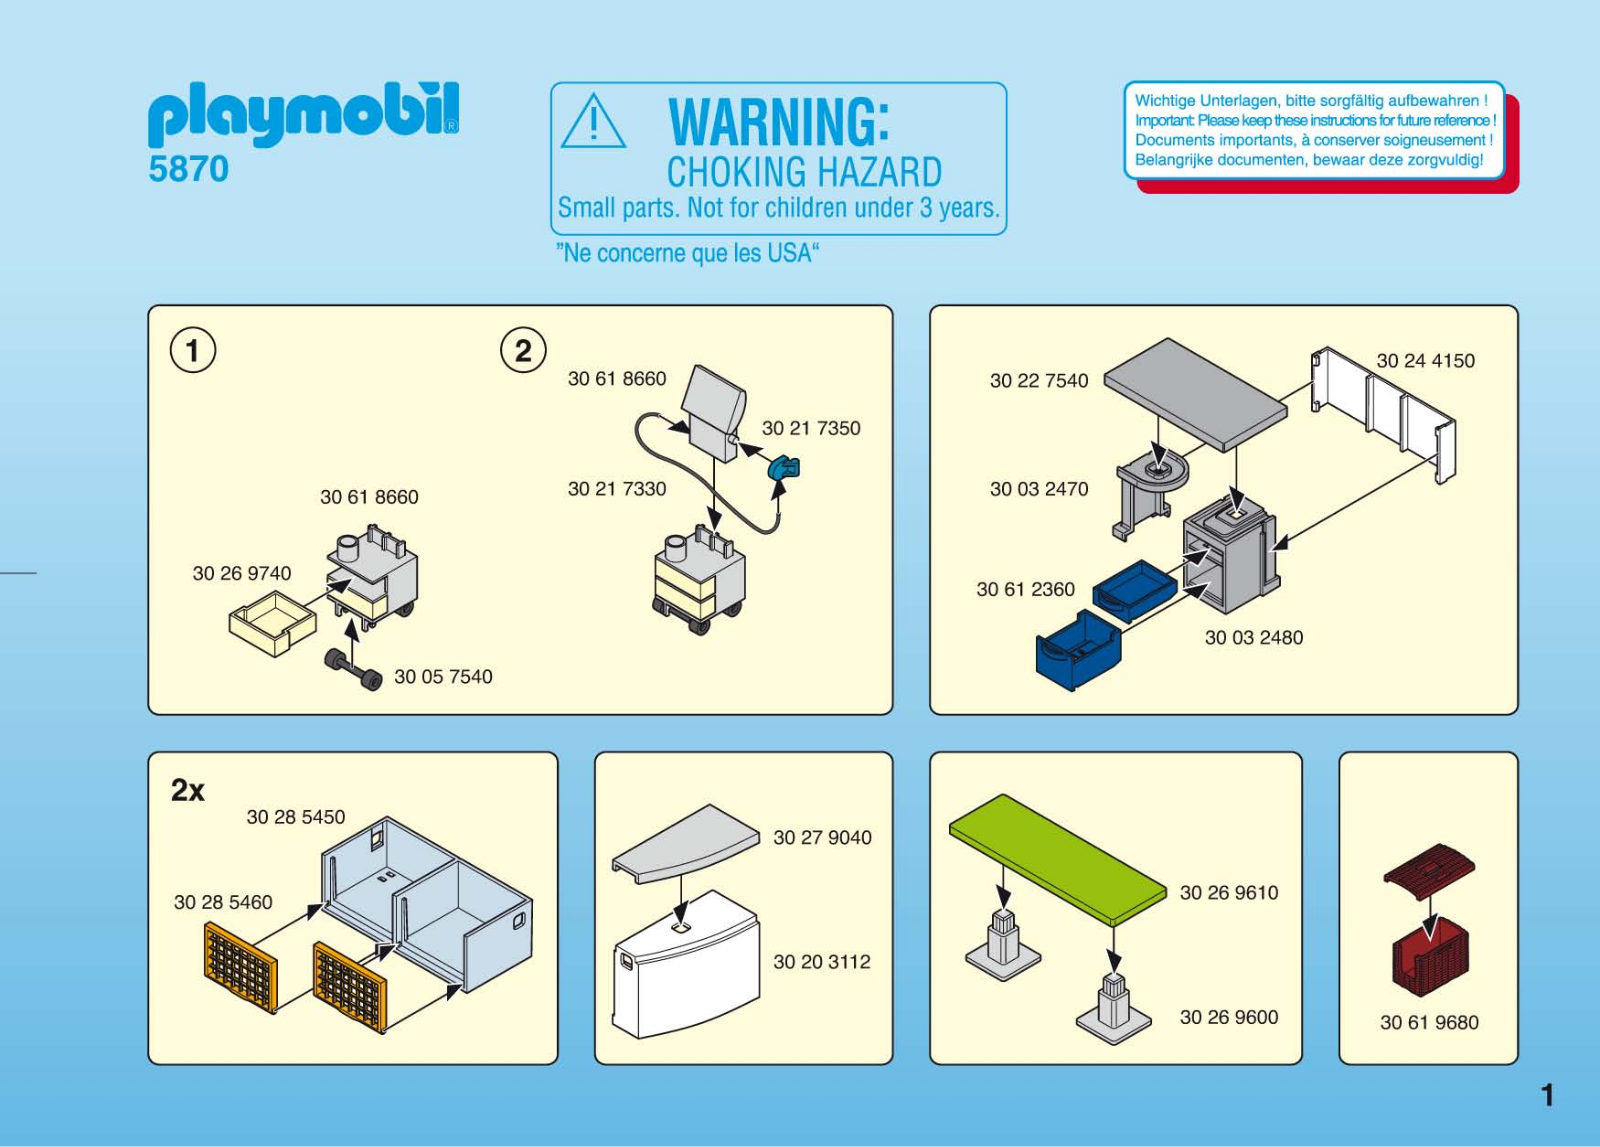 Playmobil 5870 Instructions